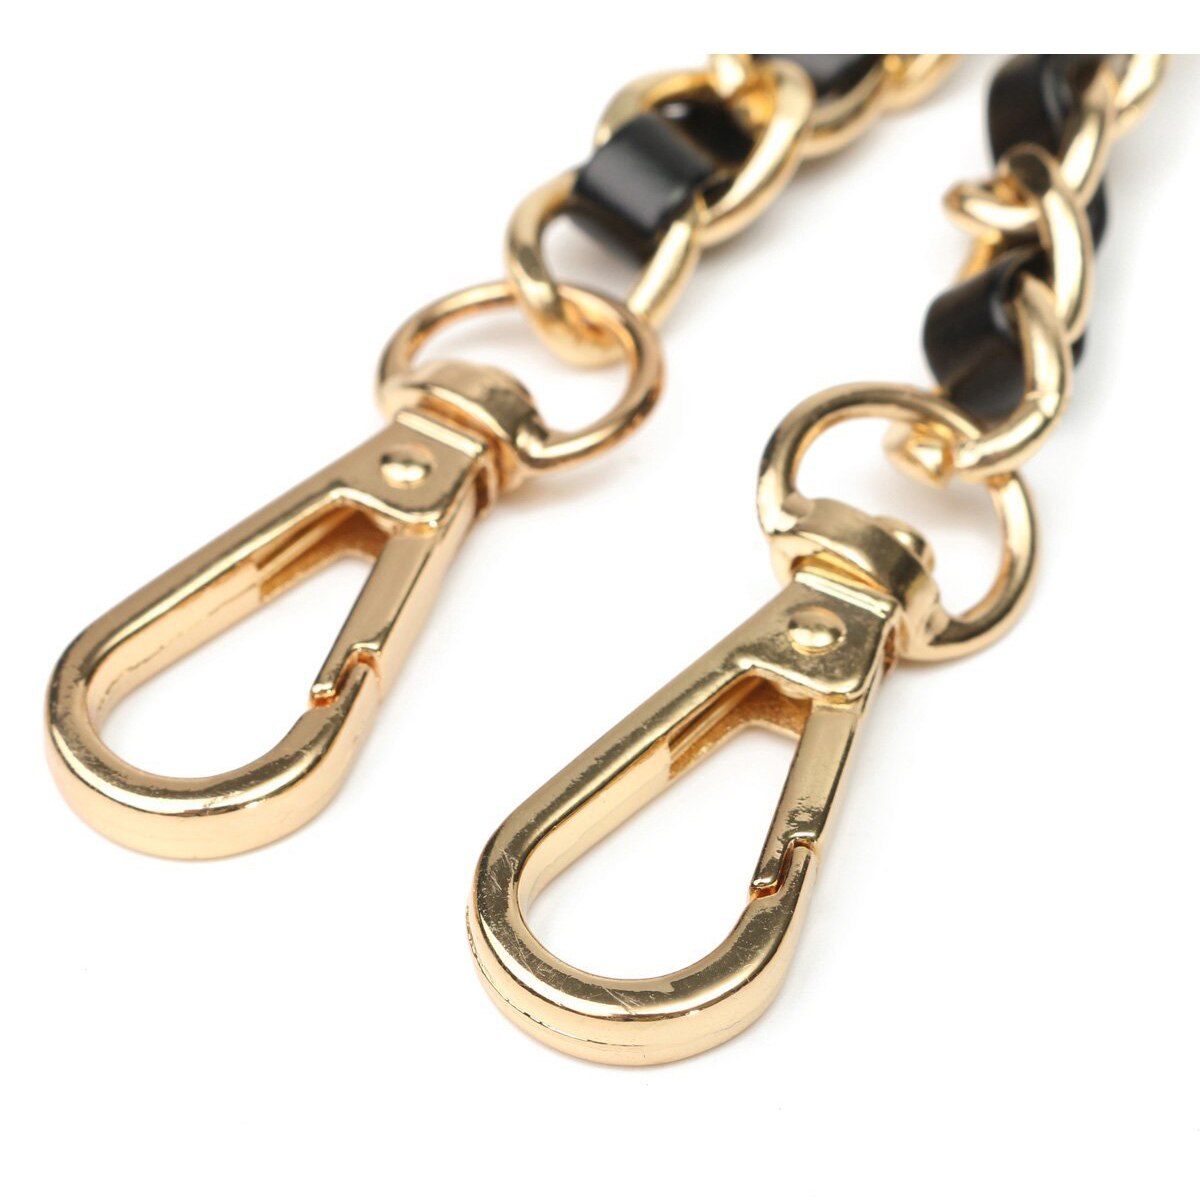 Chain Purse Cross-body Handbag Shoulder Bag Strap Replacement Accessories Light gold + black120cm - ebowsos